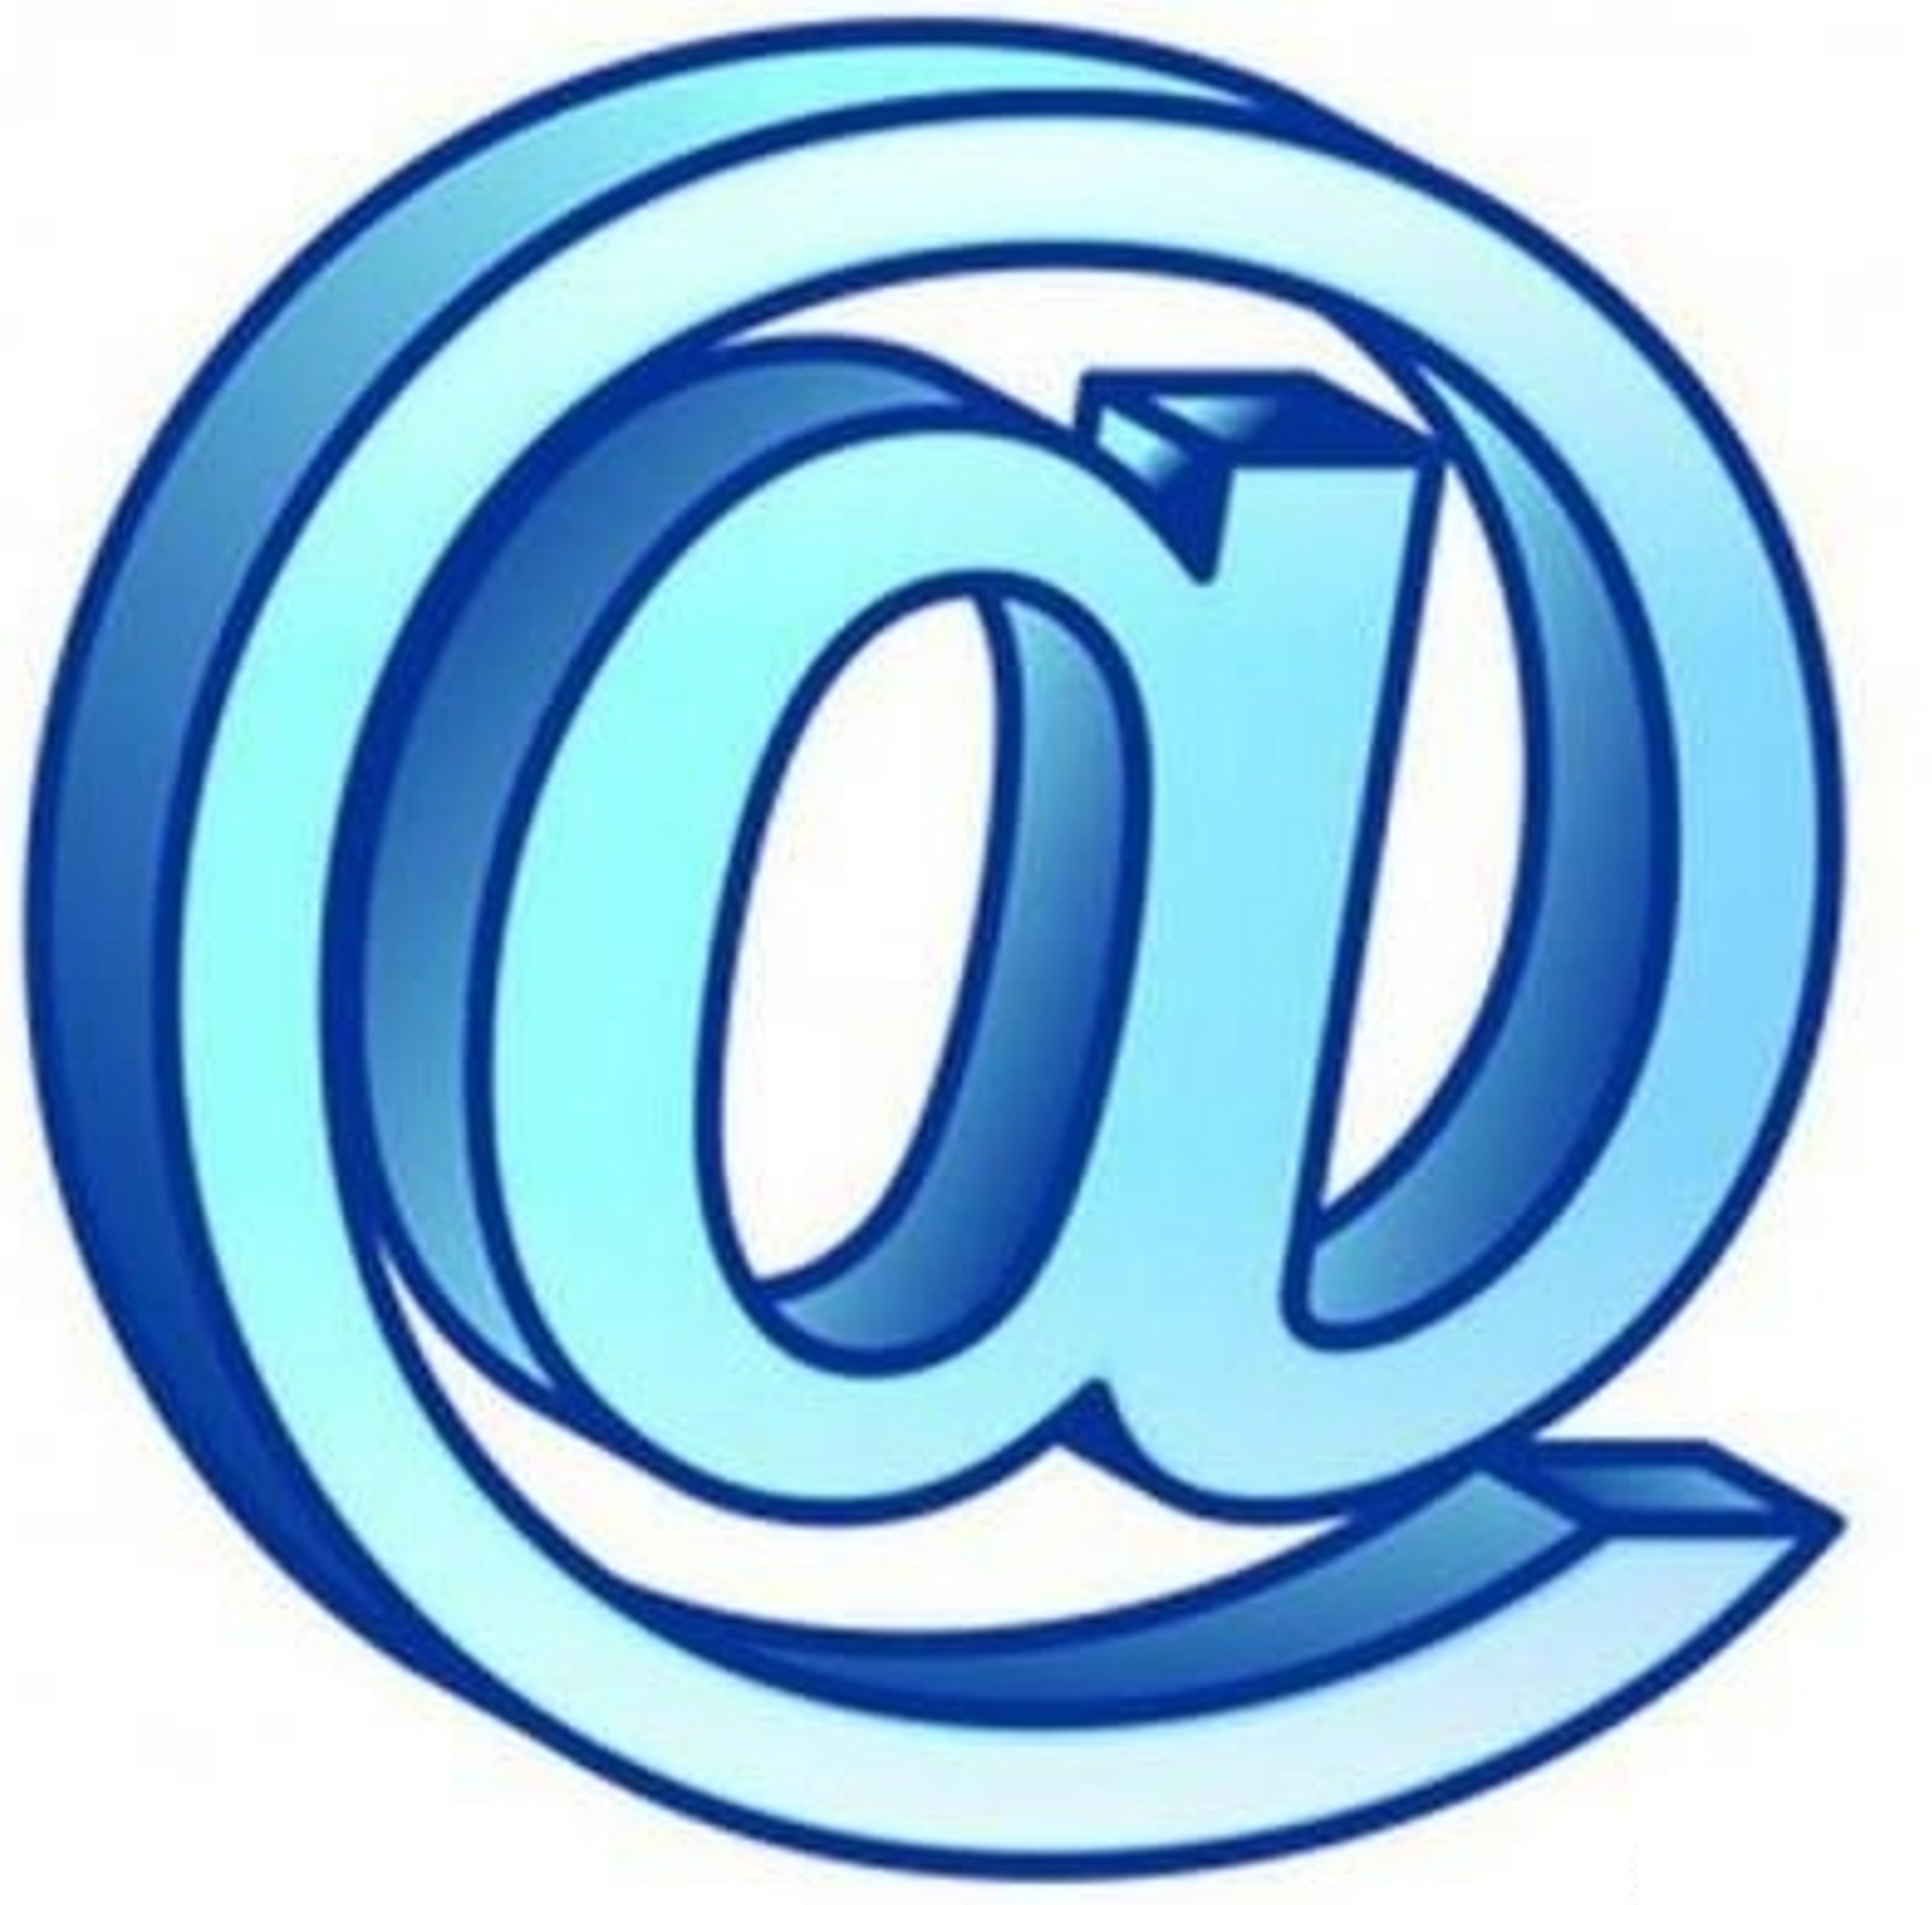 Logos shop mail ru. Значок mail.ru. Аватар для электронной почты. Аватар на майл. Значок майл ICO.